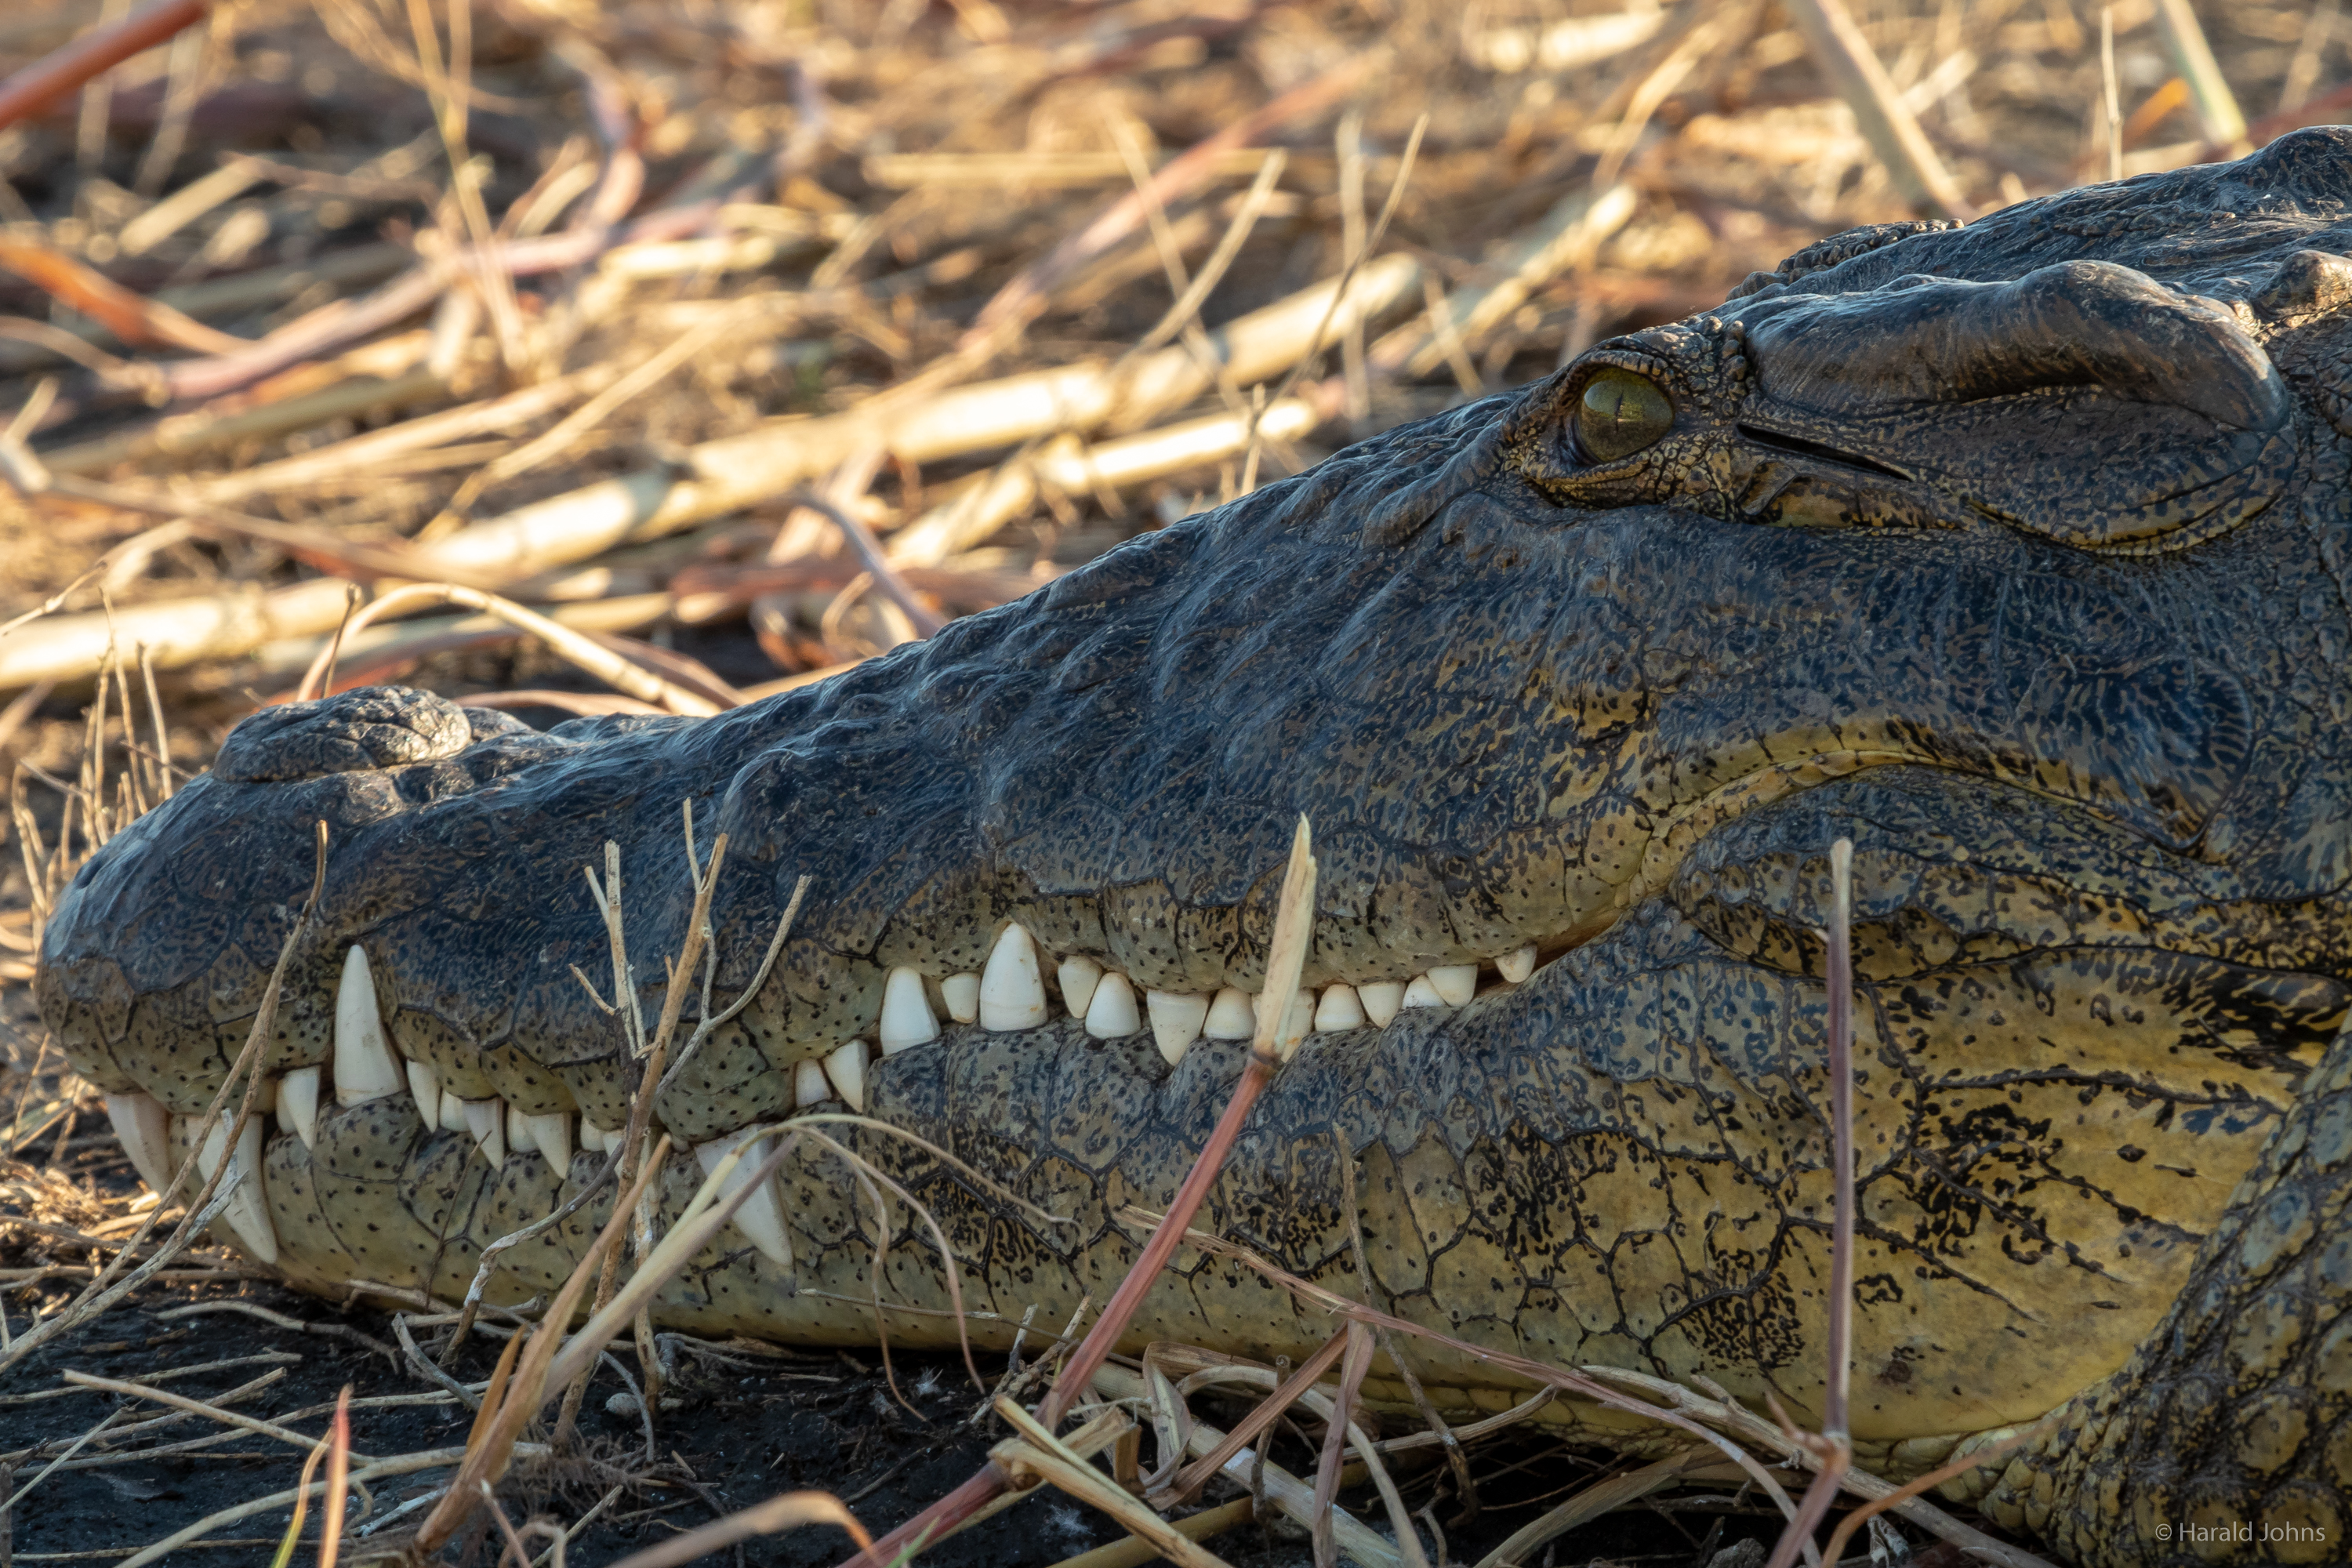 Dem Krokodiel stört unsere Nähe nicht.